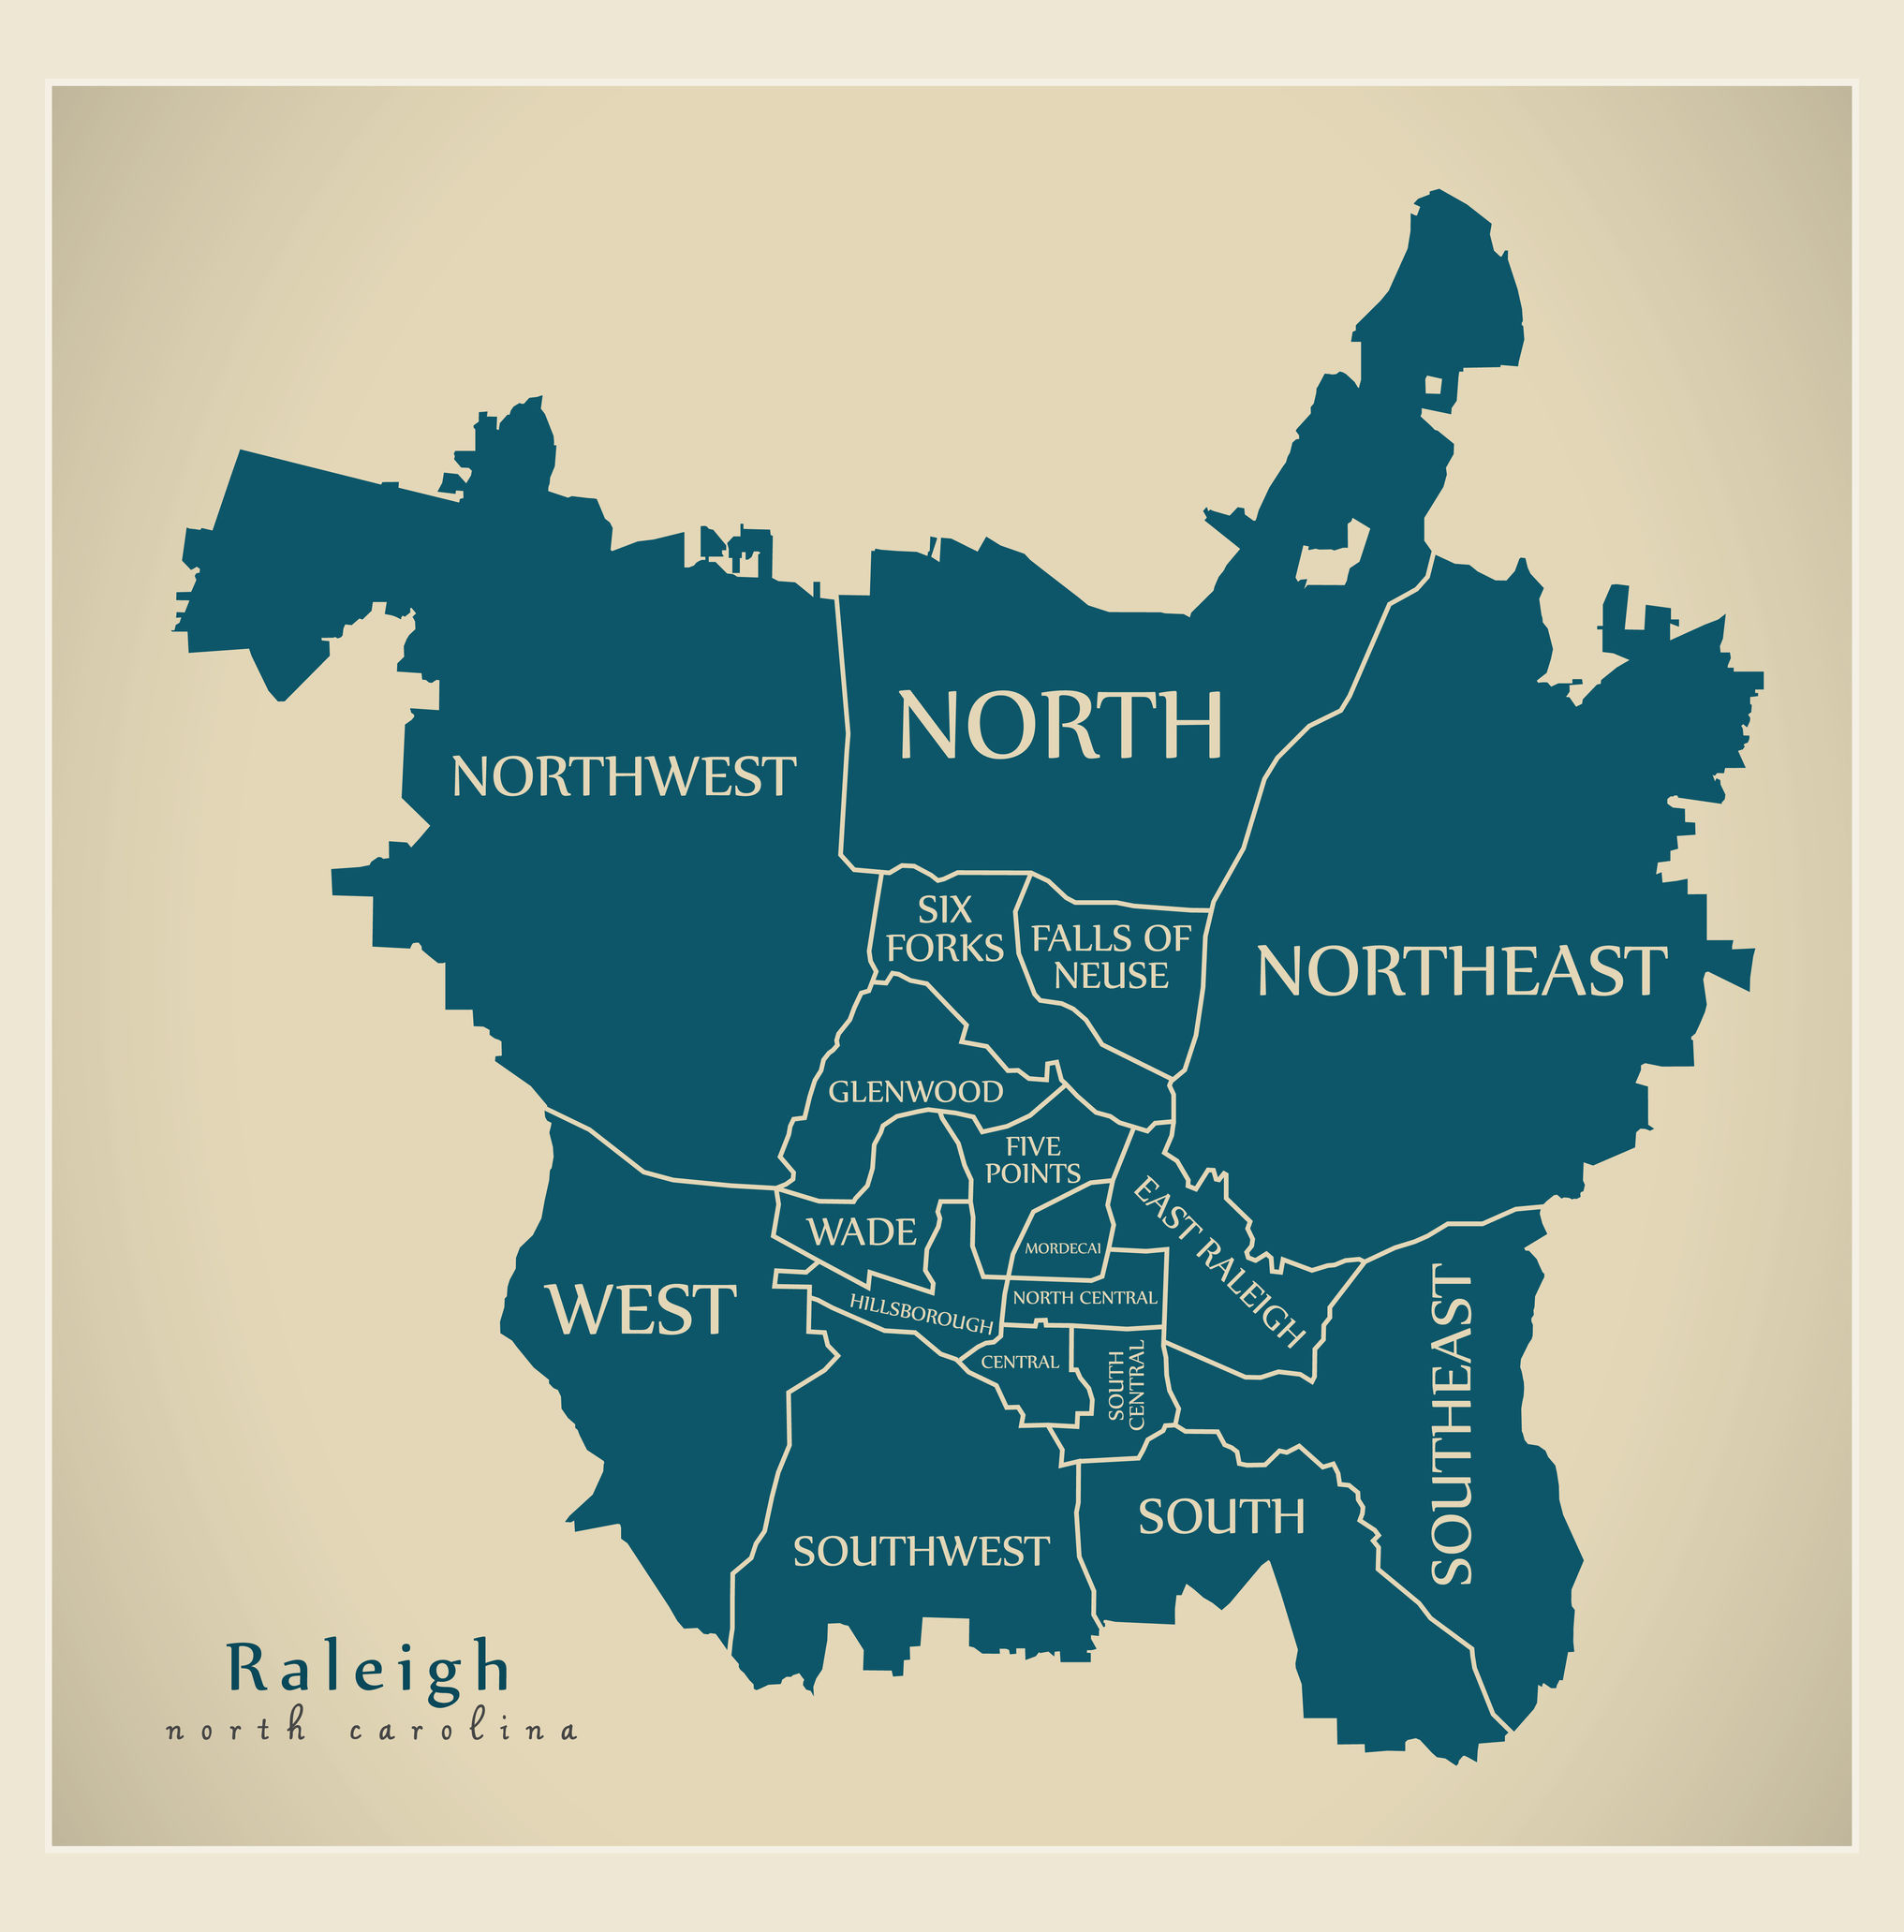 Raleigh North Carolina neighborhoods map